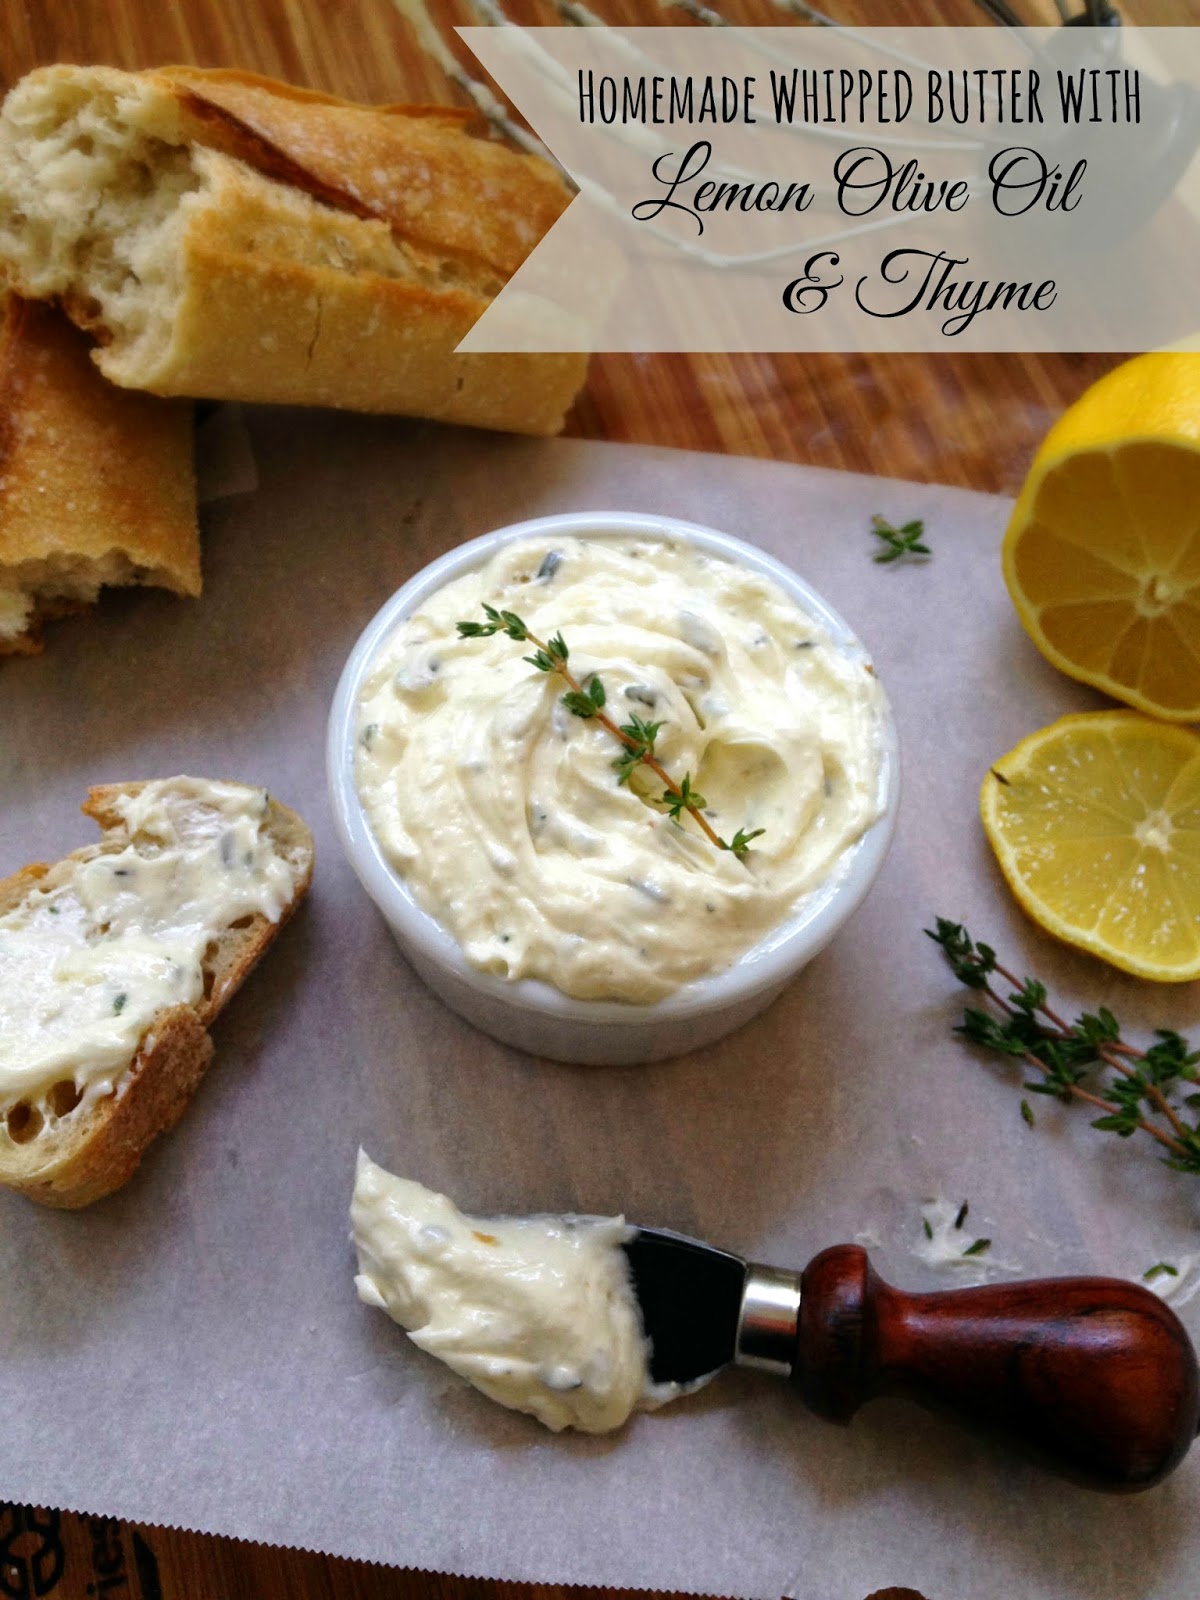 http://2.bp.blogspot.com/-Tv-I32b2aDc/U3FEDDgy7BI/AAAAAAAAaP8/EVGmgfLJW8I/s1600/homemade+gourmet+butter+with+lemon+olive+oil+and+thyme+easy+recipe-003.JPG